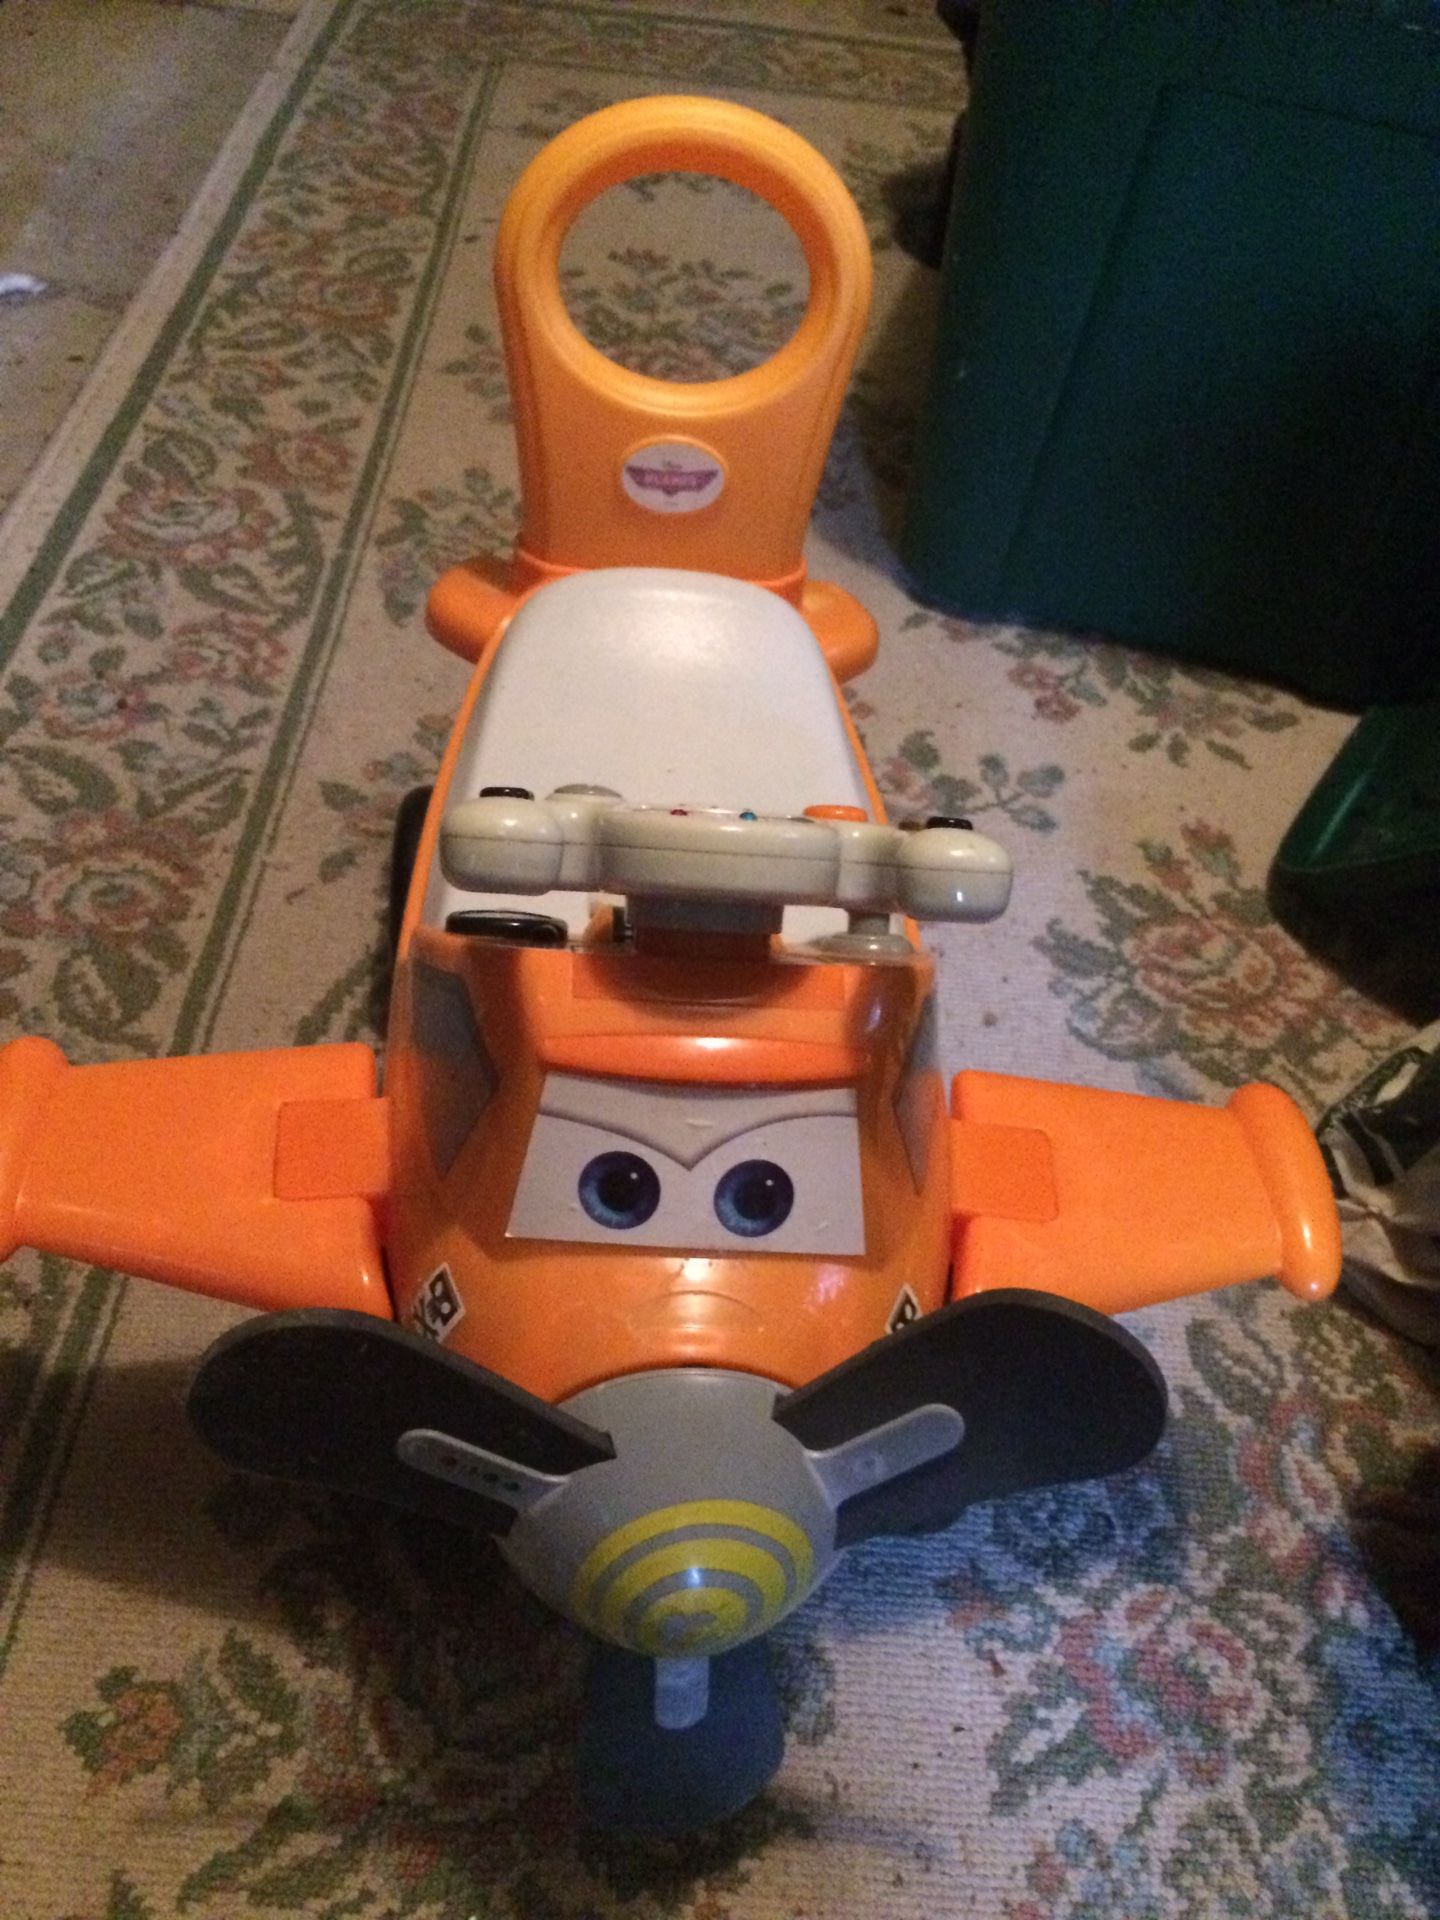 Disney Planes Dusty Crophopper Toy Kiddieland Children Ride Riding Vehicle Car